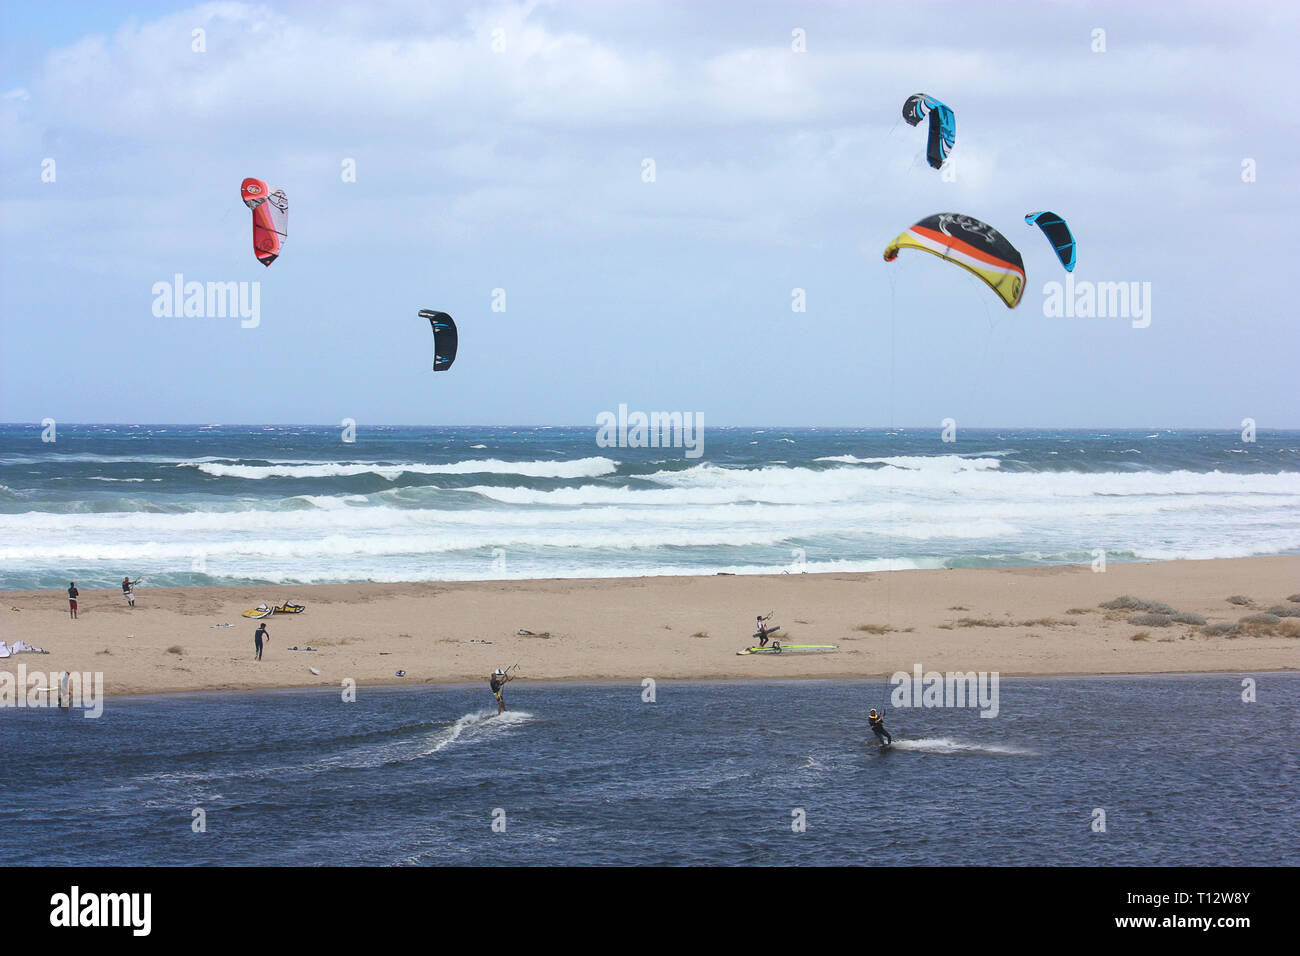 Kitesurfing on a sardinian beach Stock Photo